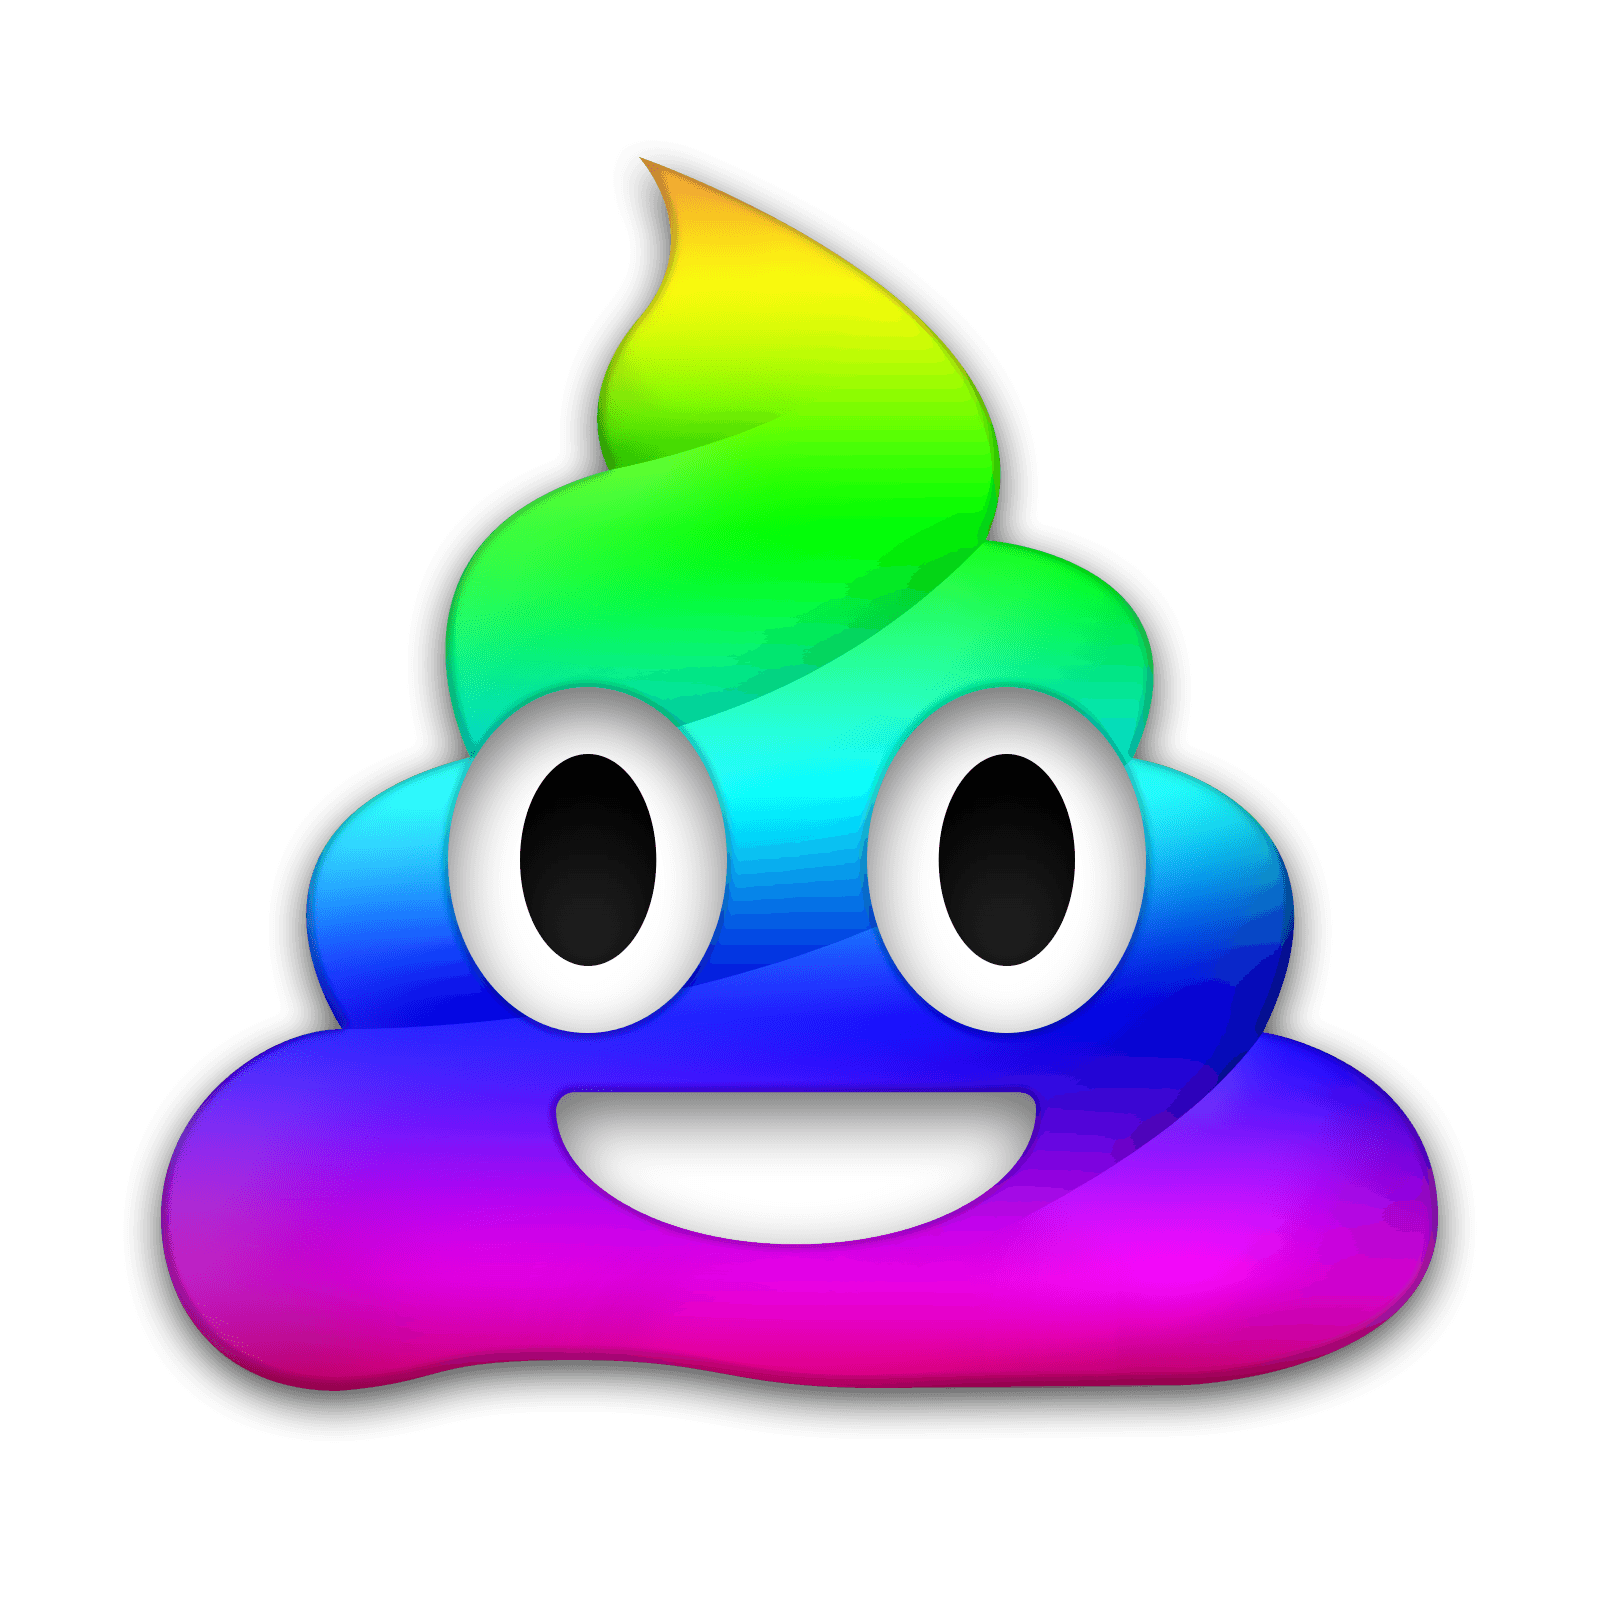 Poop Emoji Logo - Poop Emoji Png – Images Free Download #42518 - Free Icons and PNG ...